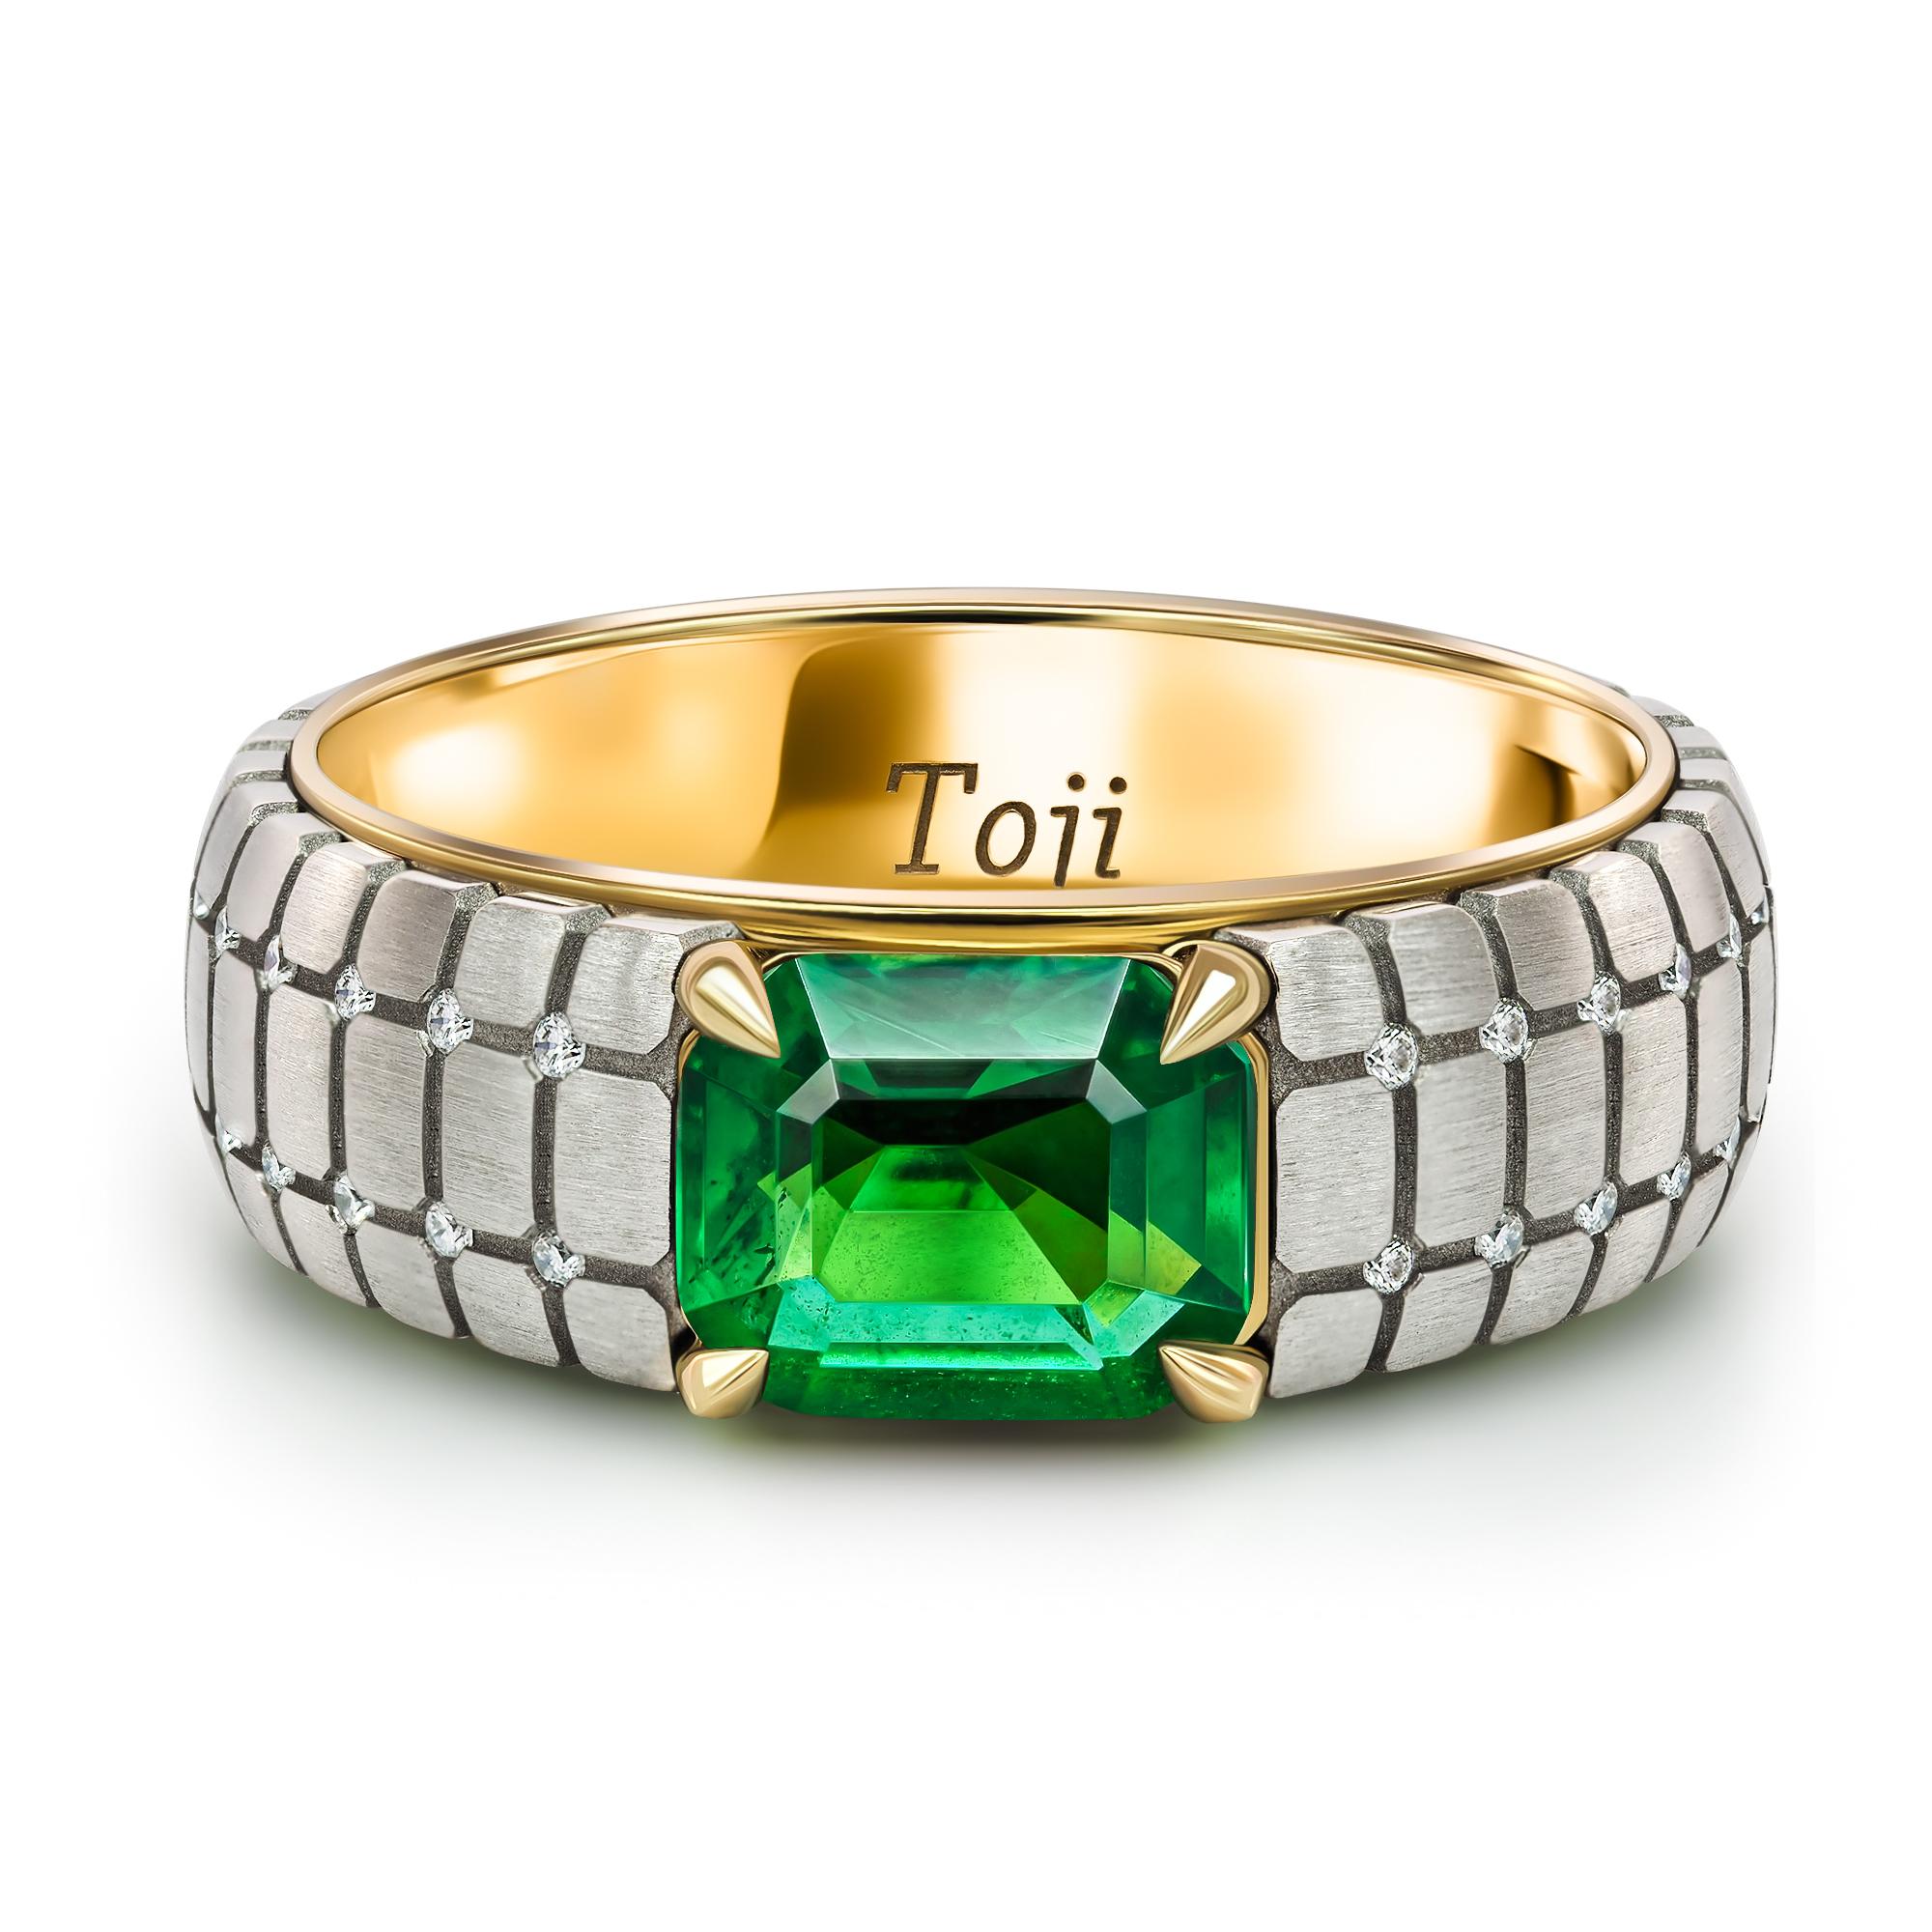 •	18k White & Yellow Gold.
•	Zambian Emerald in emerald cut – total carat weight 2.49.
•	Diamonds in round cut – total carat weight 0.30.
•	GRS Insignificant
•	Product weight – 8.33 grams
